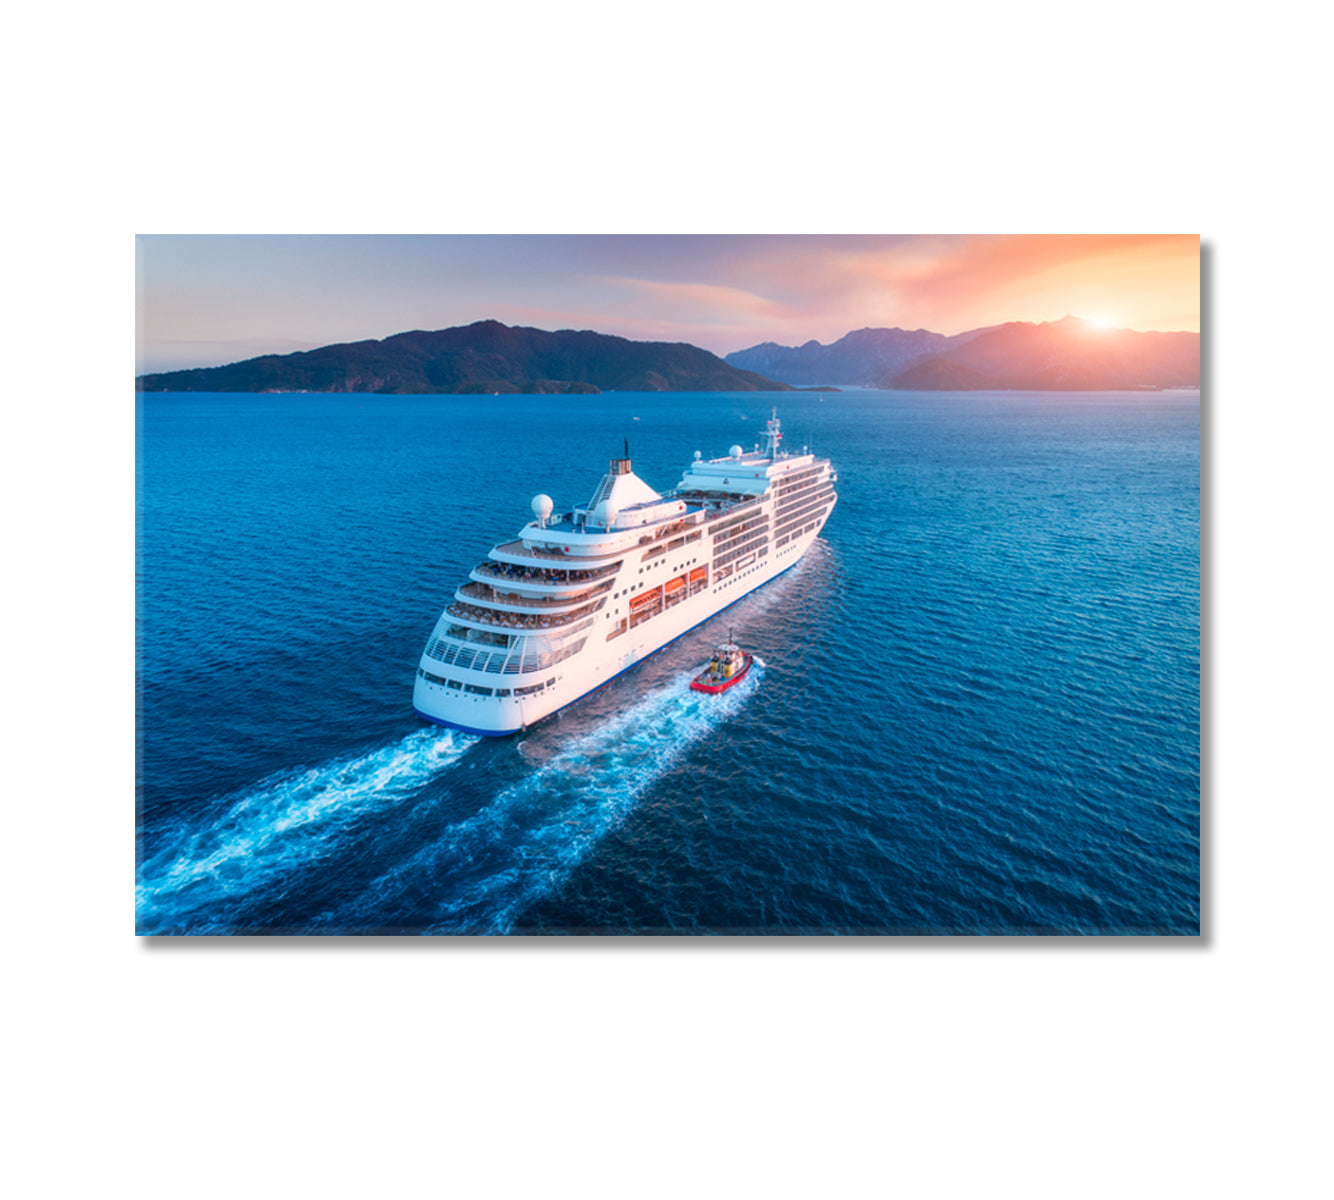 Luxury Cruise Ship in Harbor Canvas Print-Canvas Print-CetArt-1 Panel-24x16 inches-CetArt